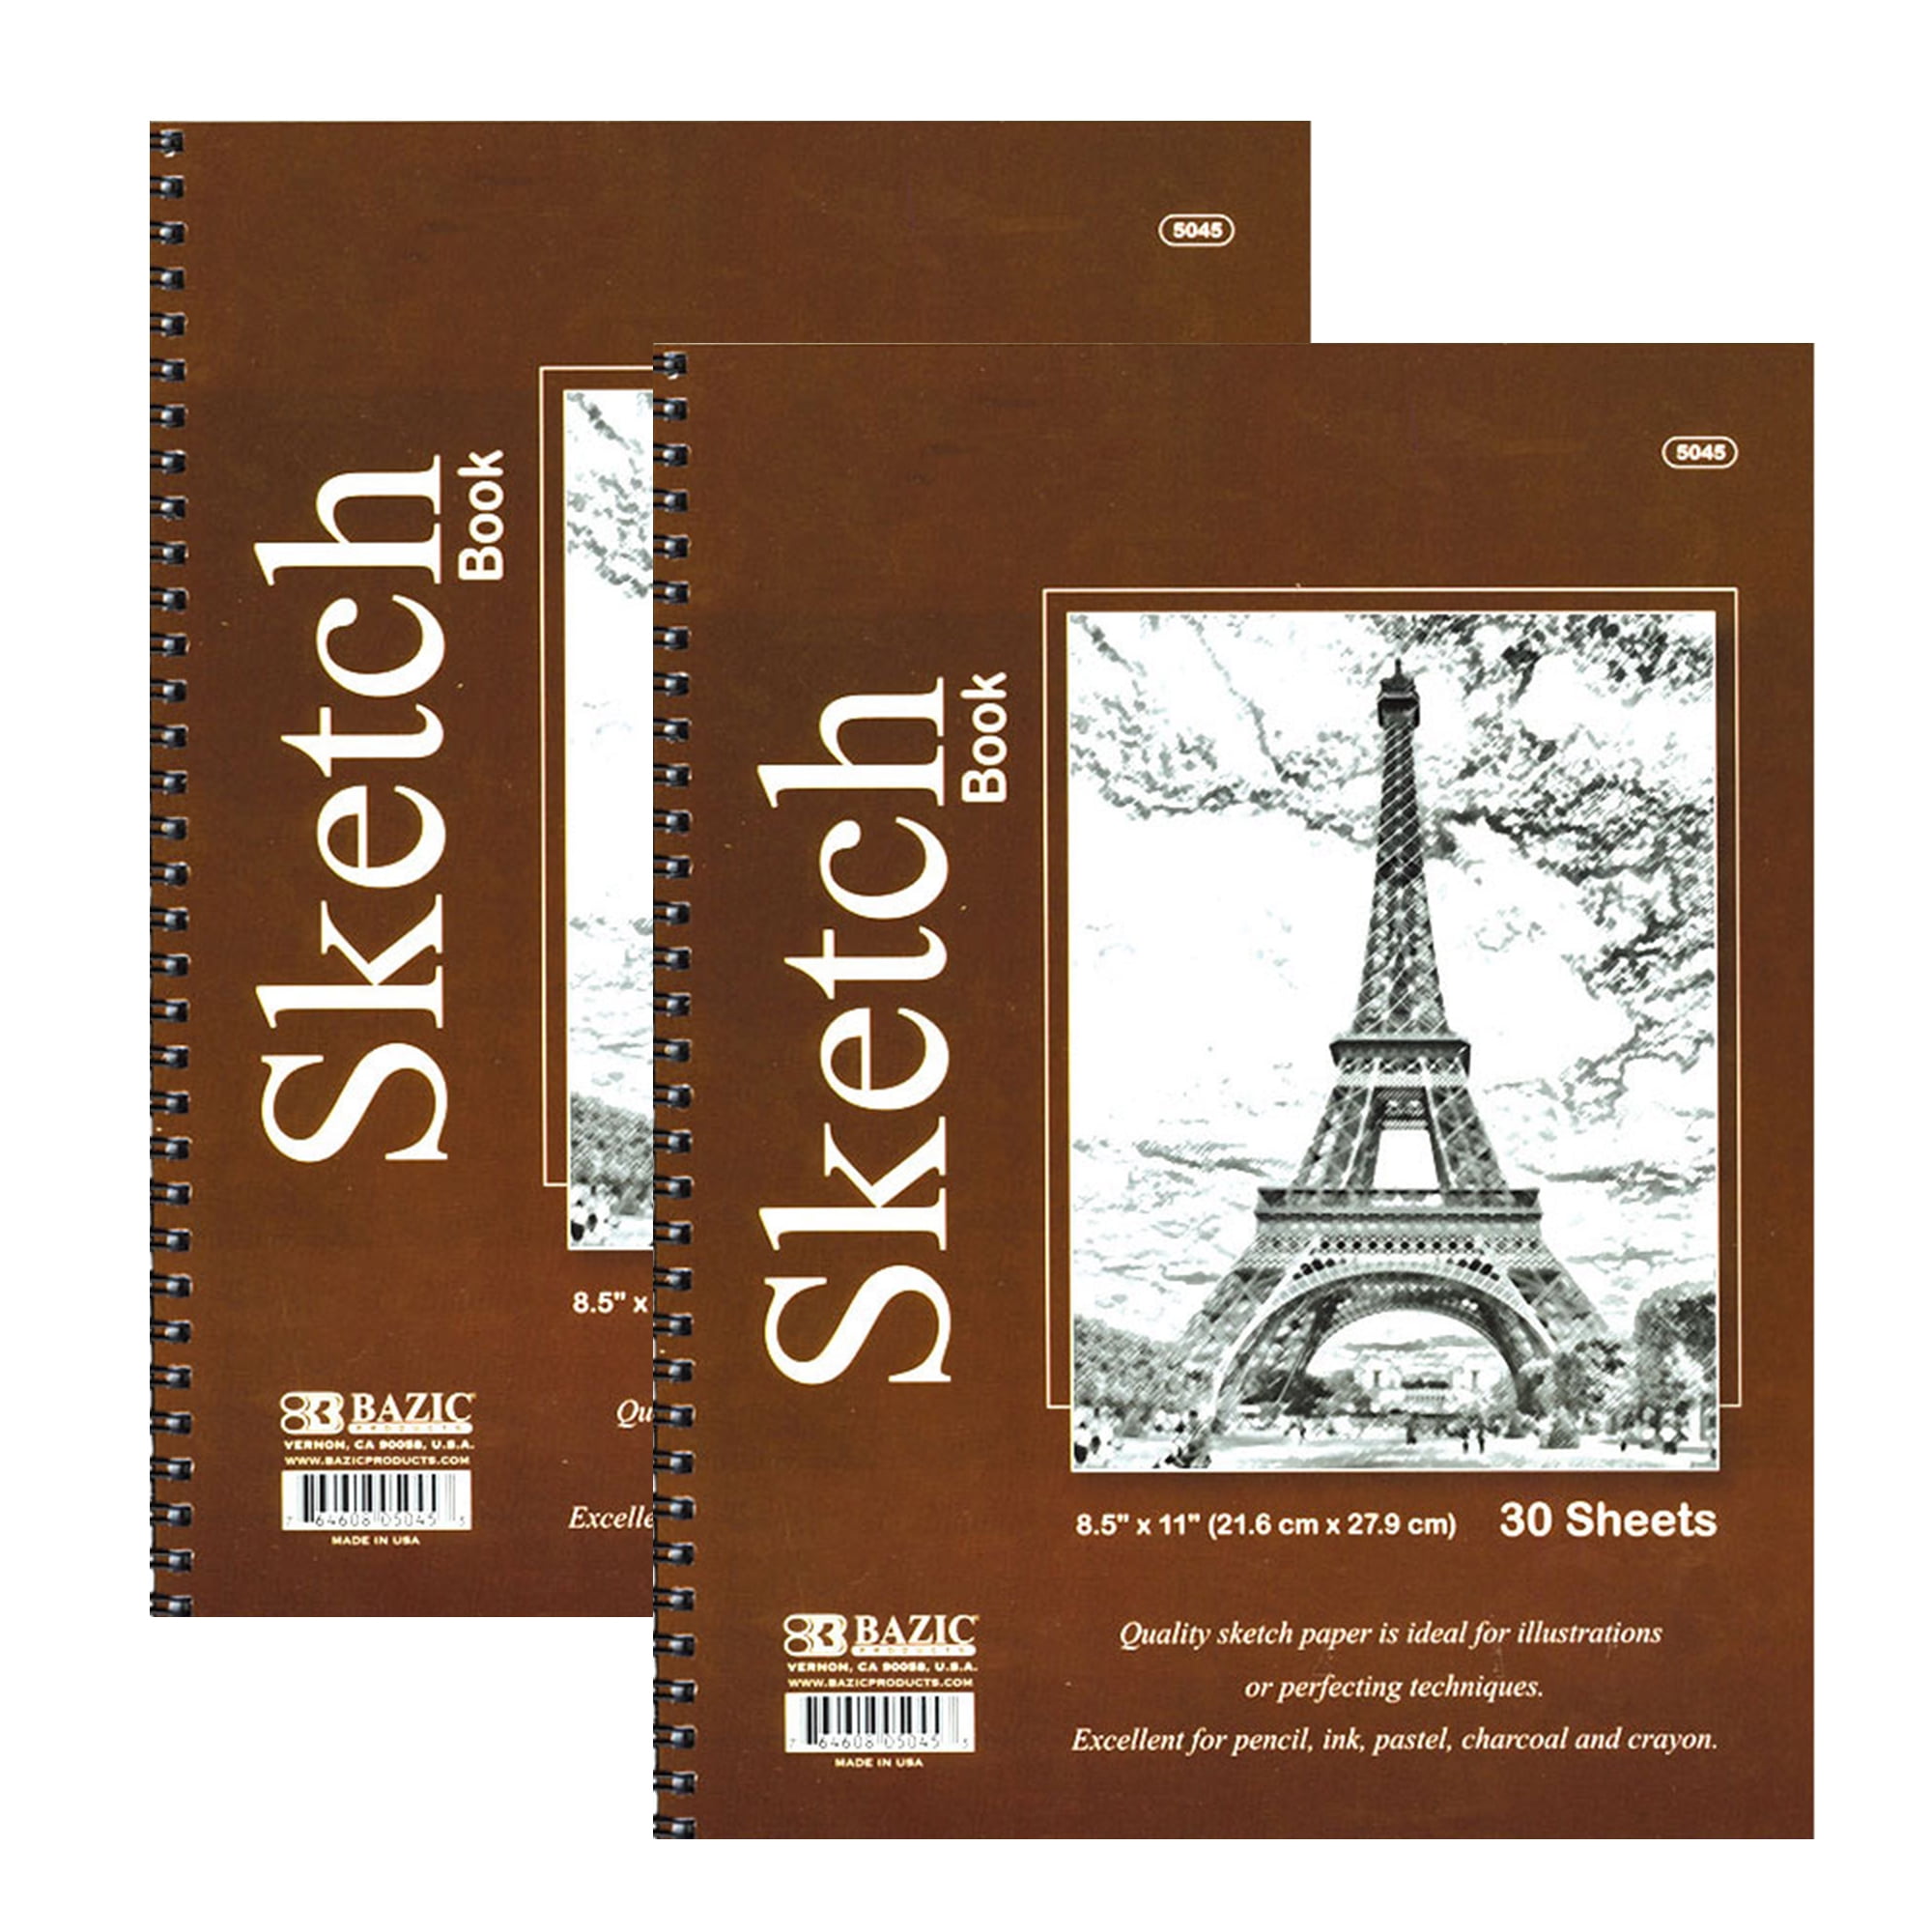  Sketch Book 8.5 X 11 Inch, Pack Of 2 Sketch Pad